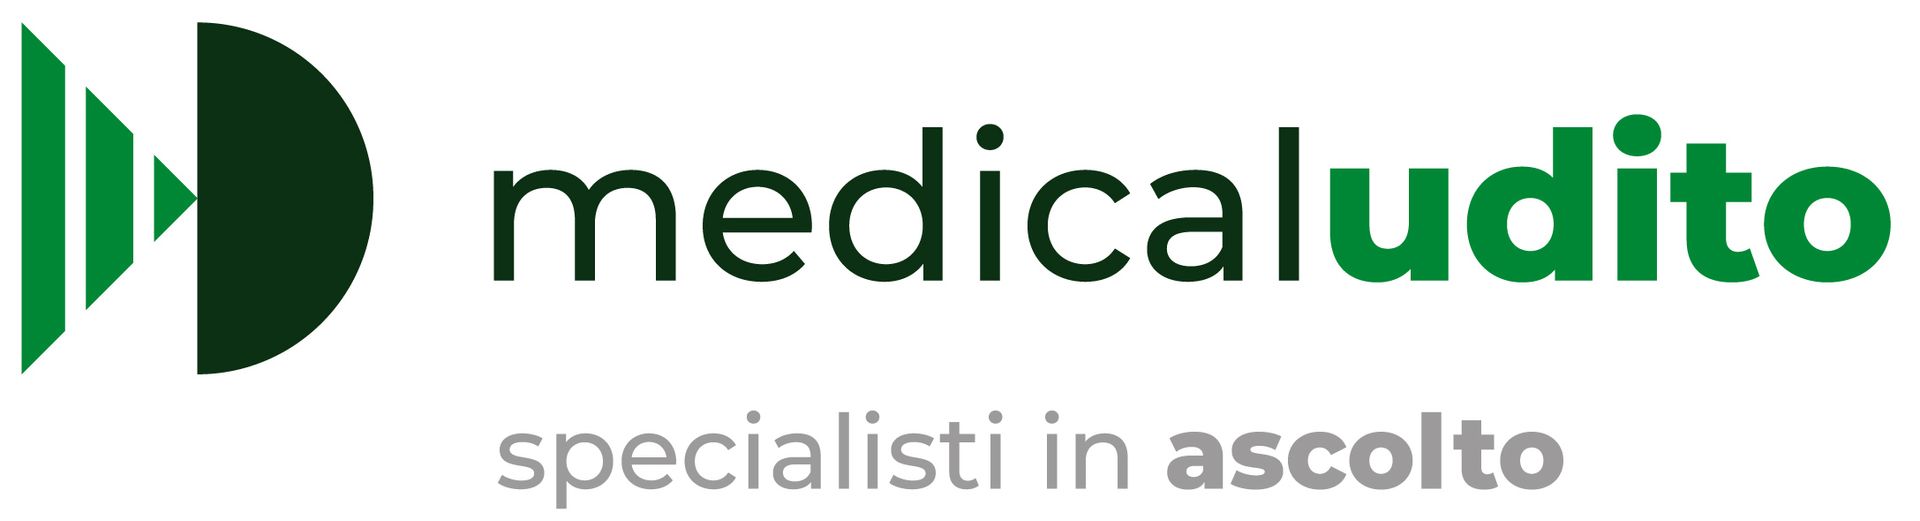 Logo Medical Udito